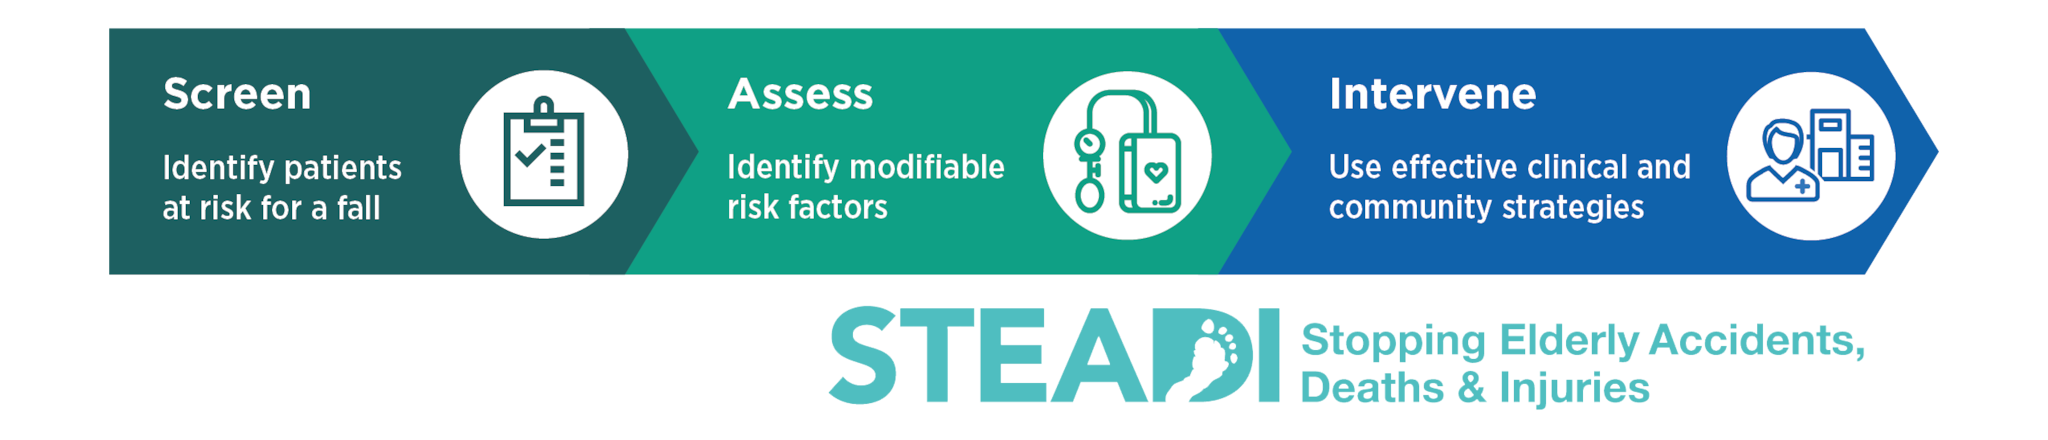 STEADI (Stopping Elderly Accidents, Deaths & Injuries) logo - Screen, Assess, Intervene